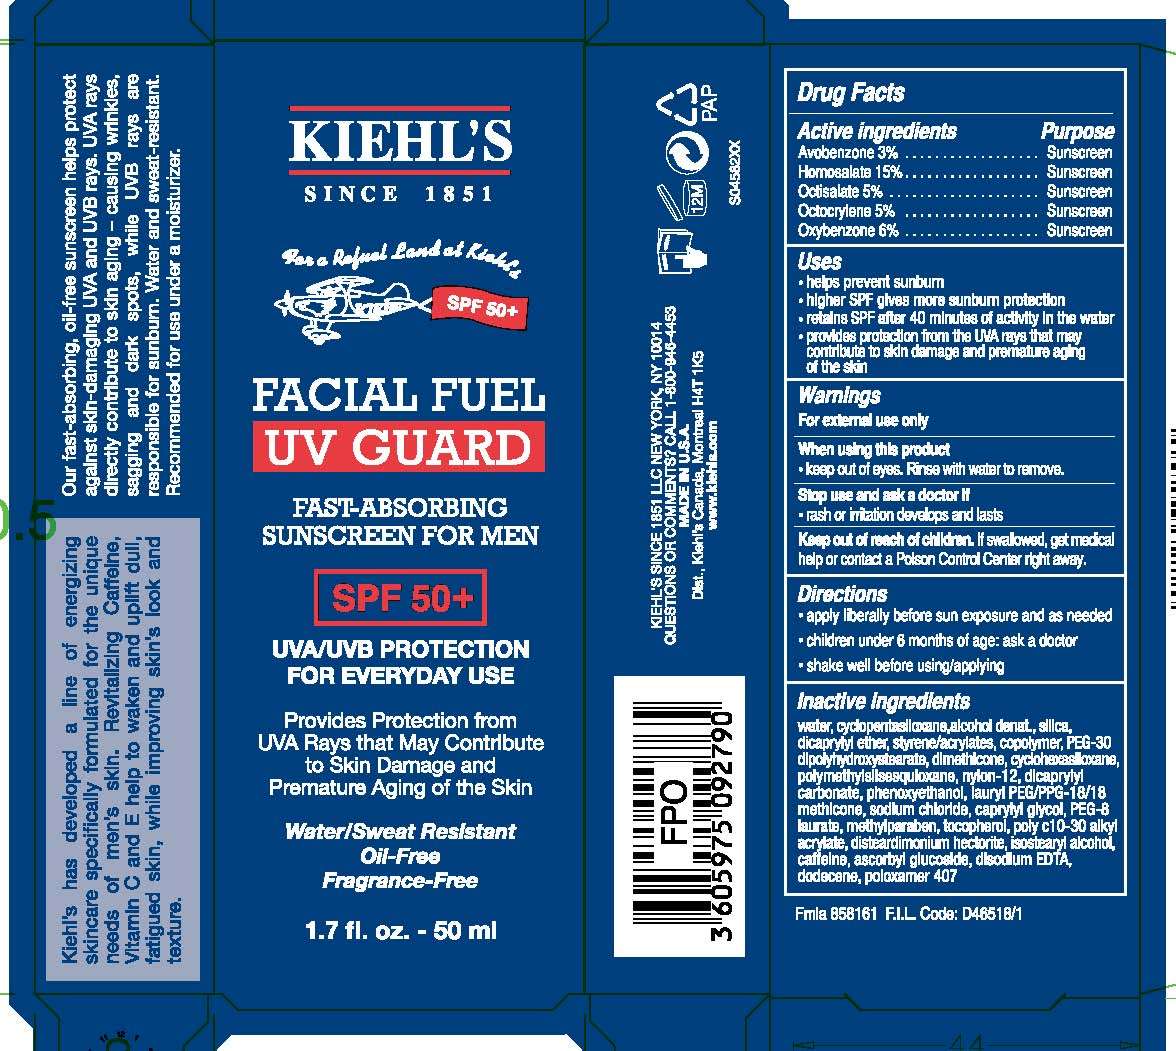 Kiehls Since 1851 Facial Fuel UV Guard